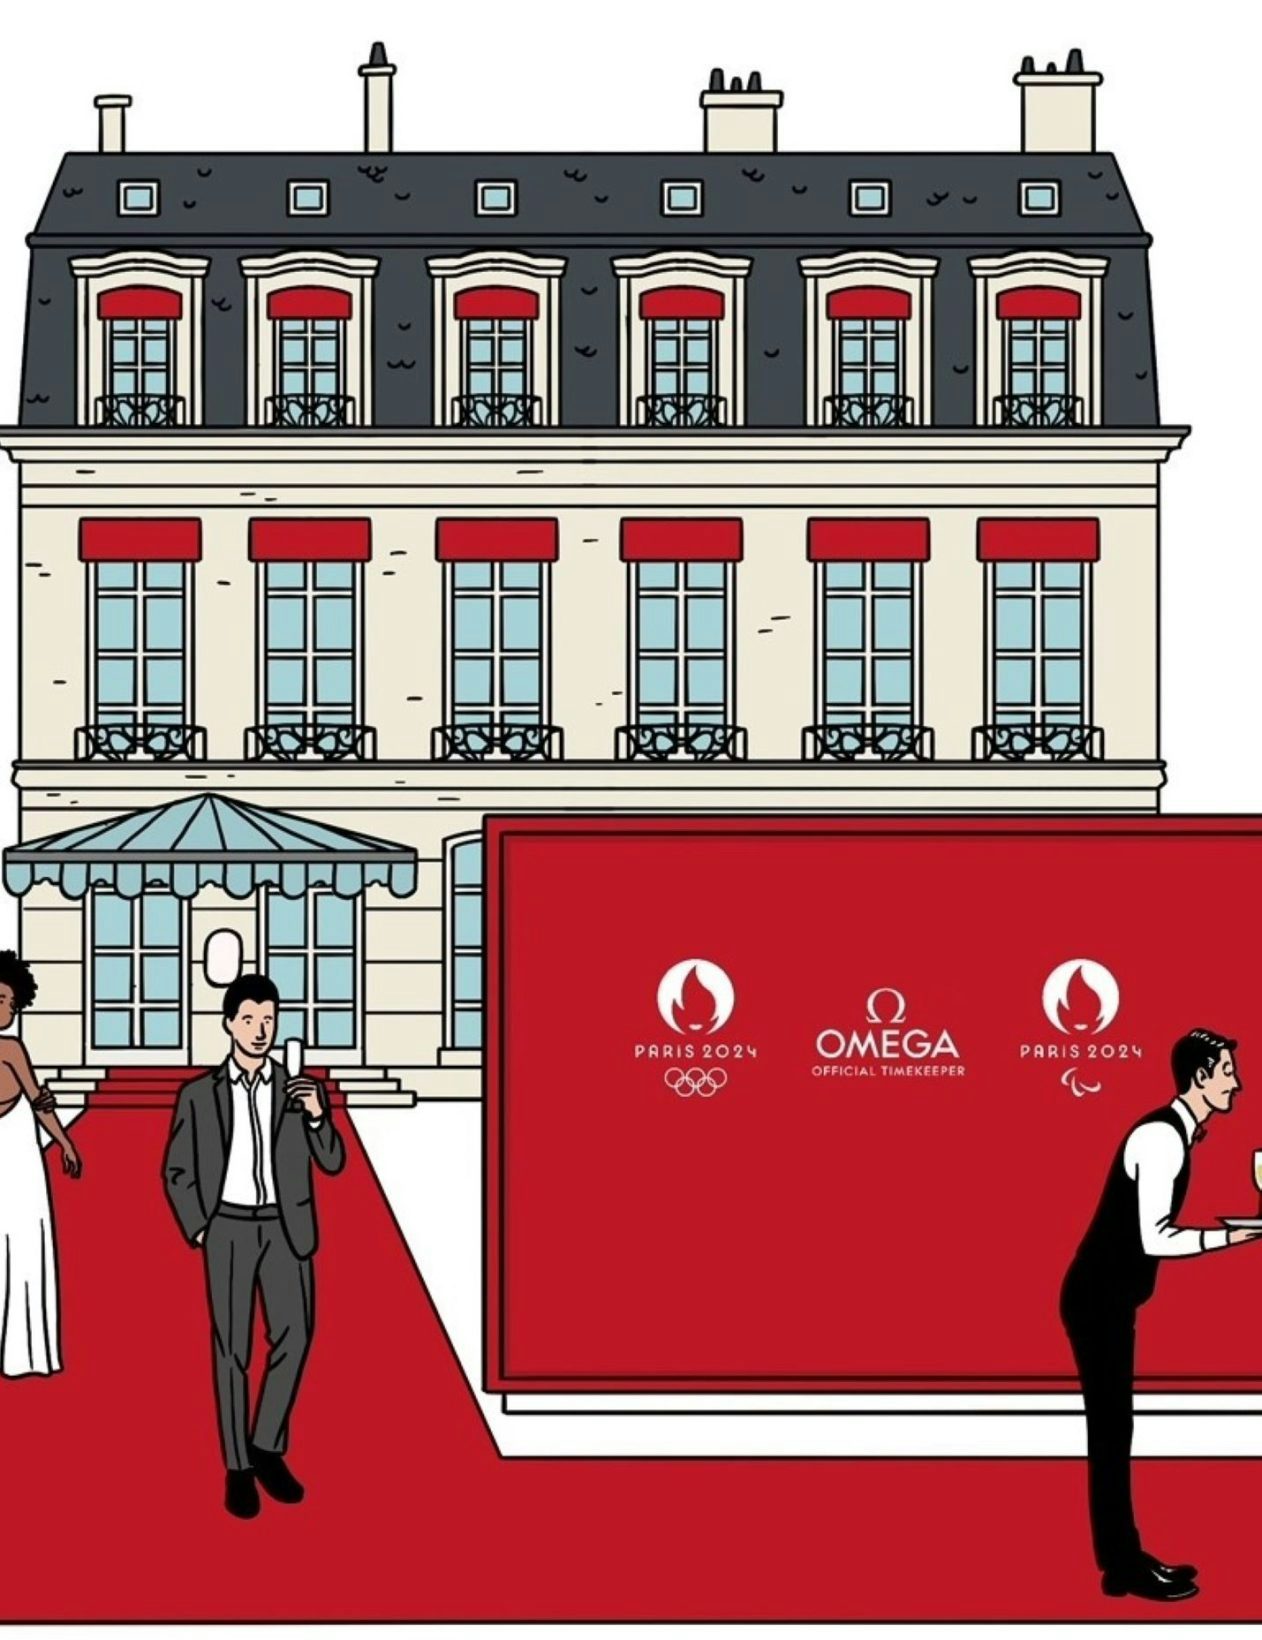 Omega reveals its “OMEGA House” for Paris 2024